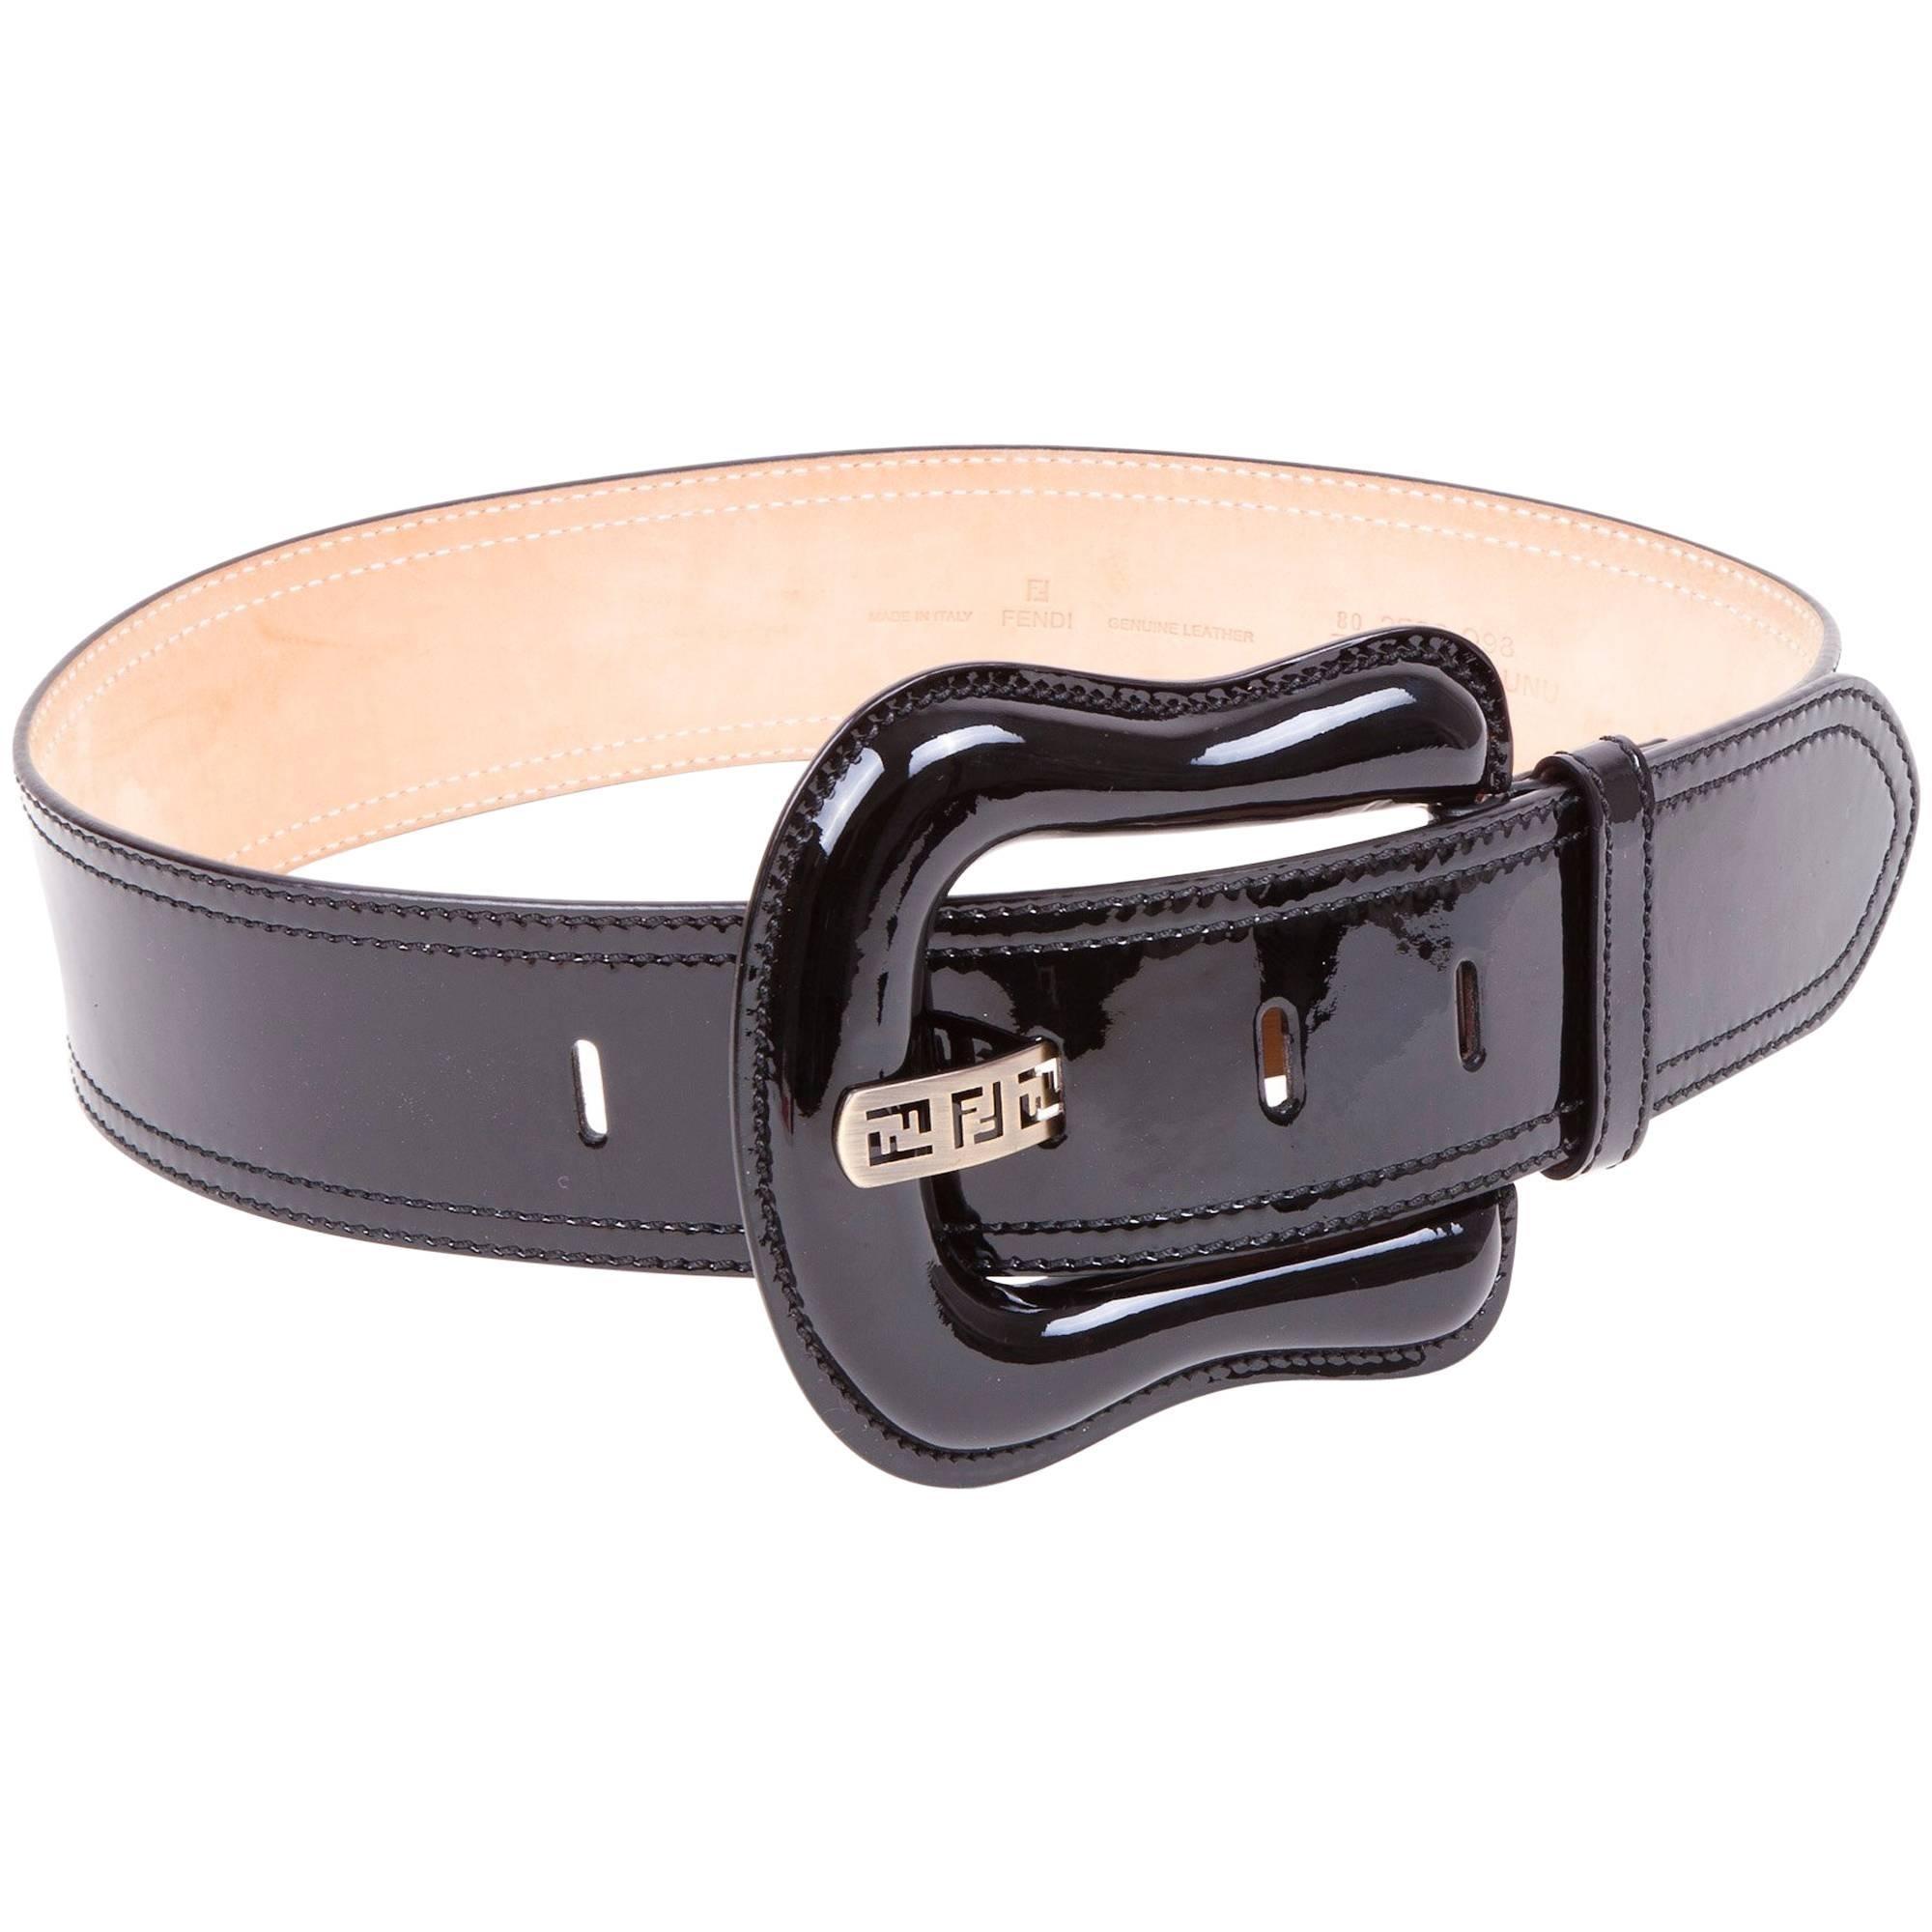 FENDI Belt in Black Patent Leather Size 80